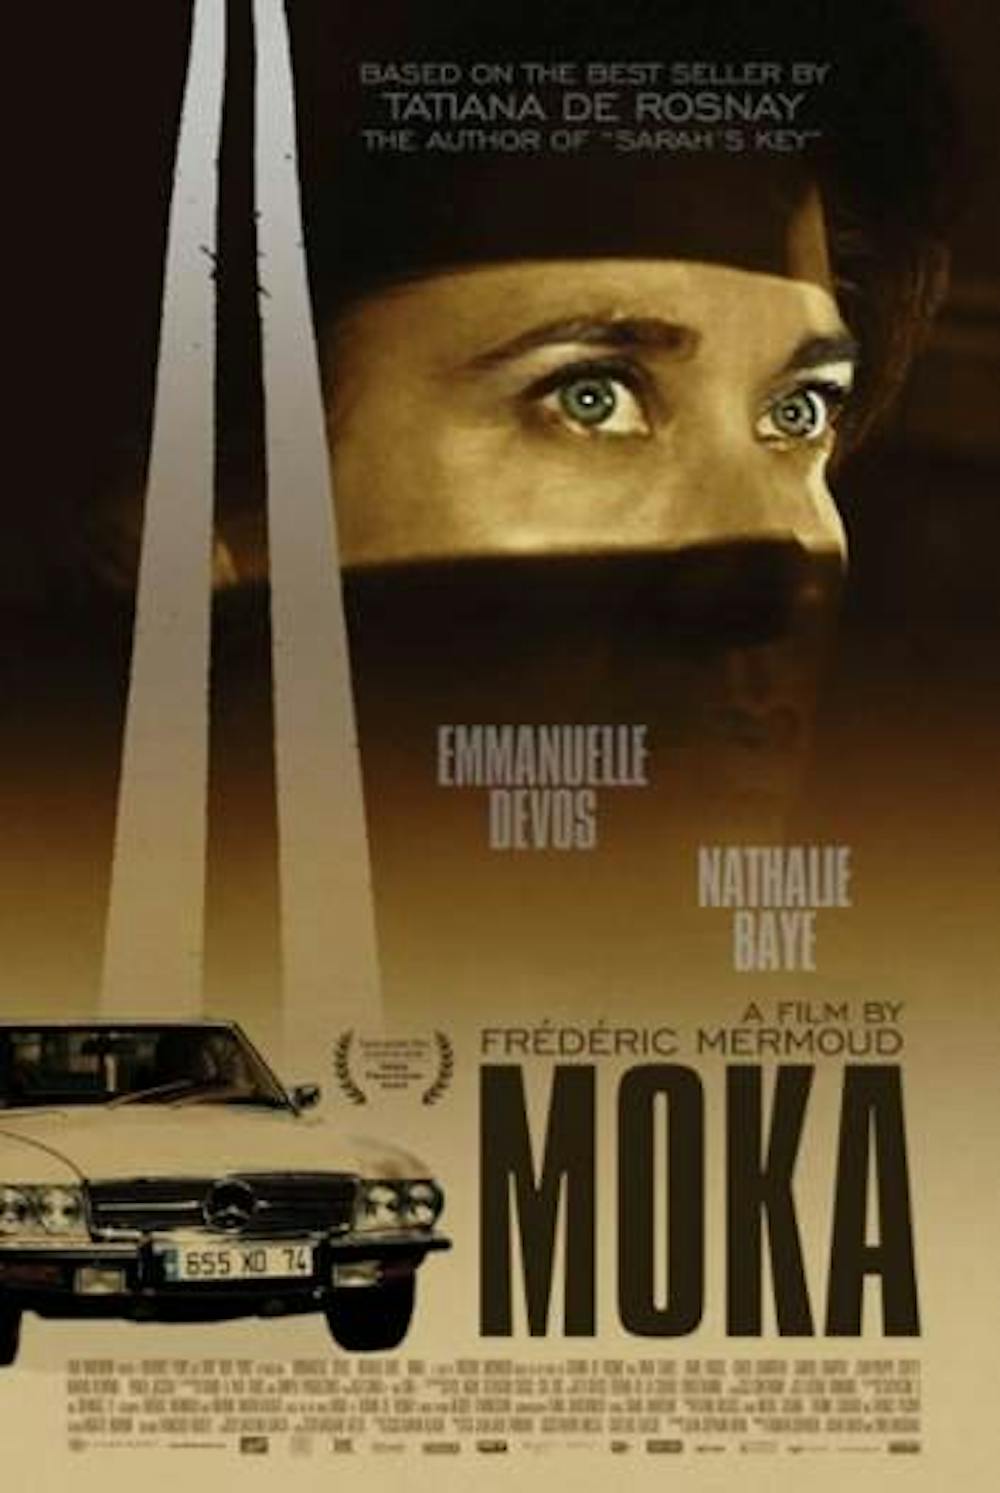 "Moka" balances stereotypical revenge trope with unrealistic characters